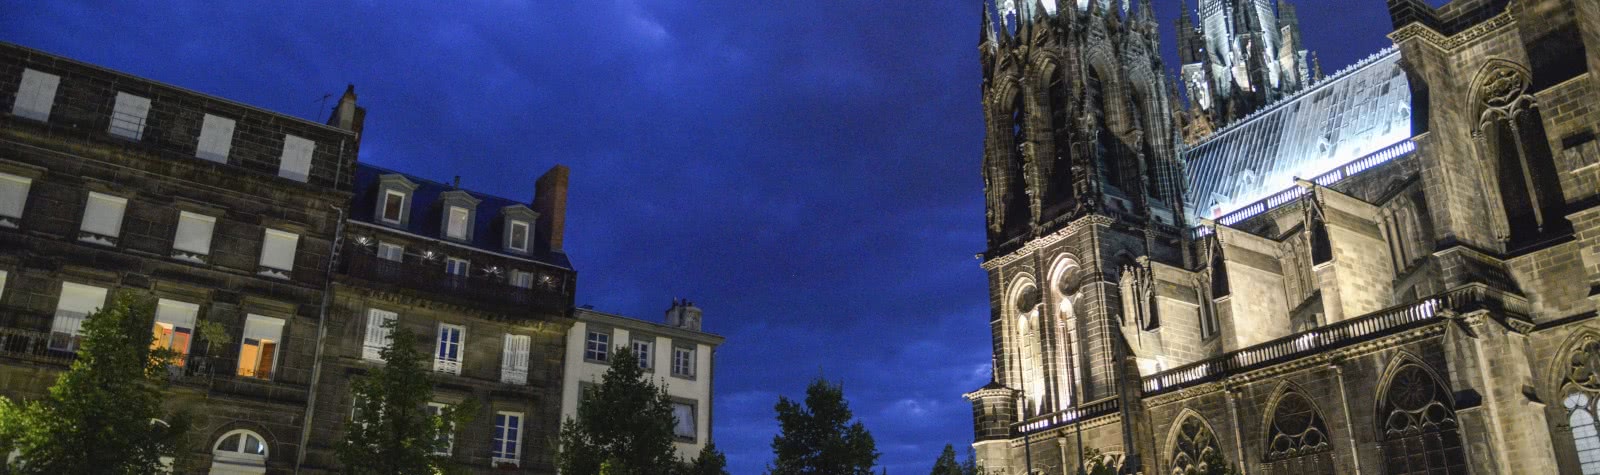 Cathedrale Clermont-Ferrand nuit tombée